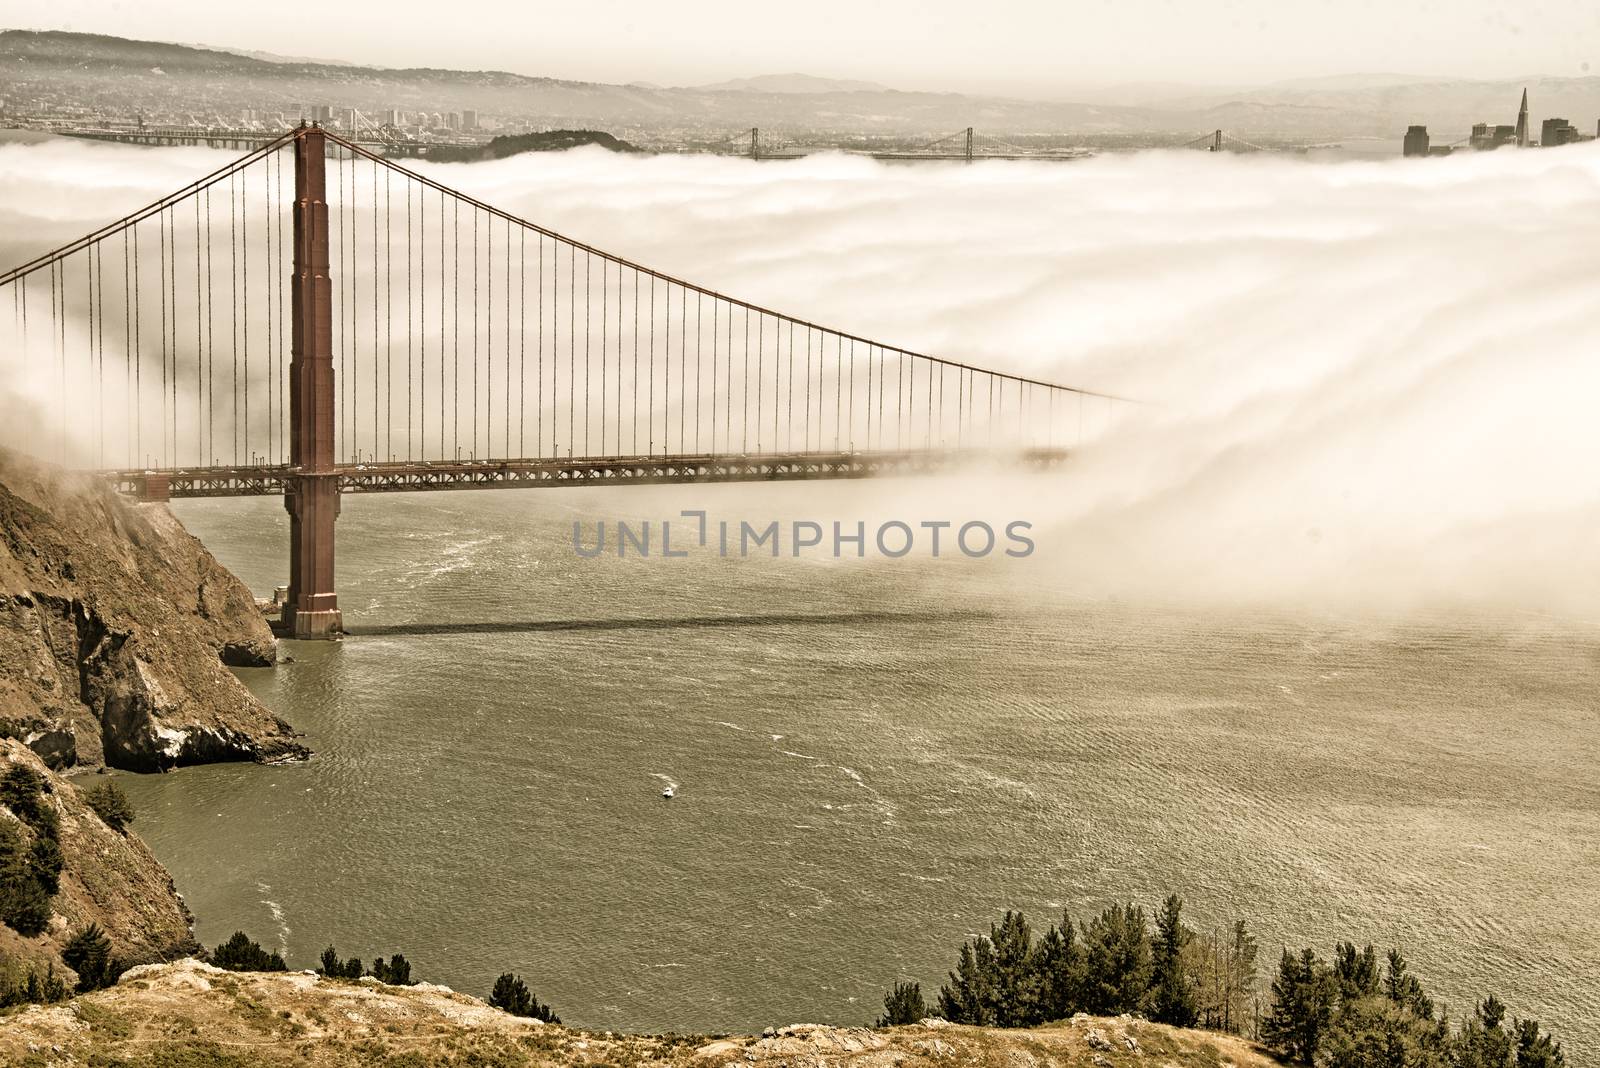 Golden Gate Bridge by CelsoDiniz